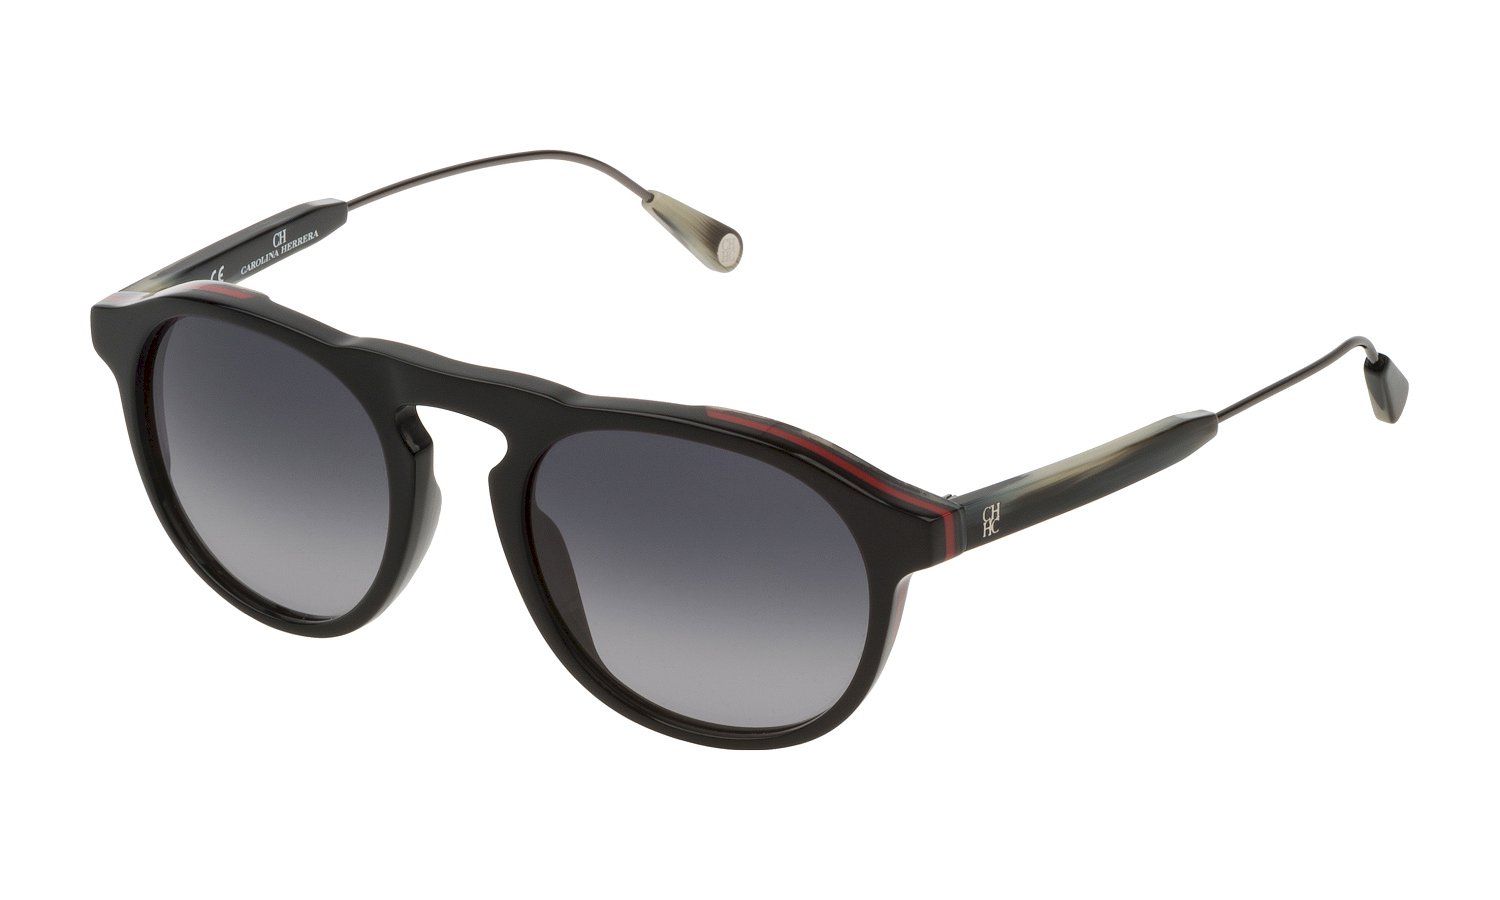 Carolina Herrera SHE808 Sunglasses from $176.30 | Carolina Herrera ...